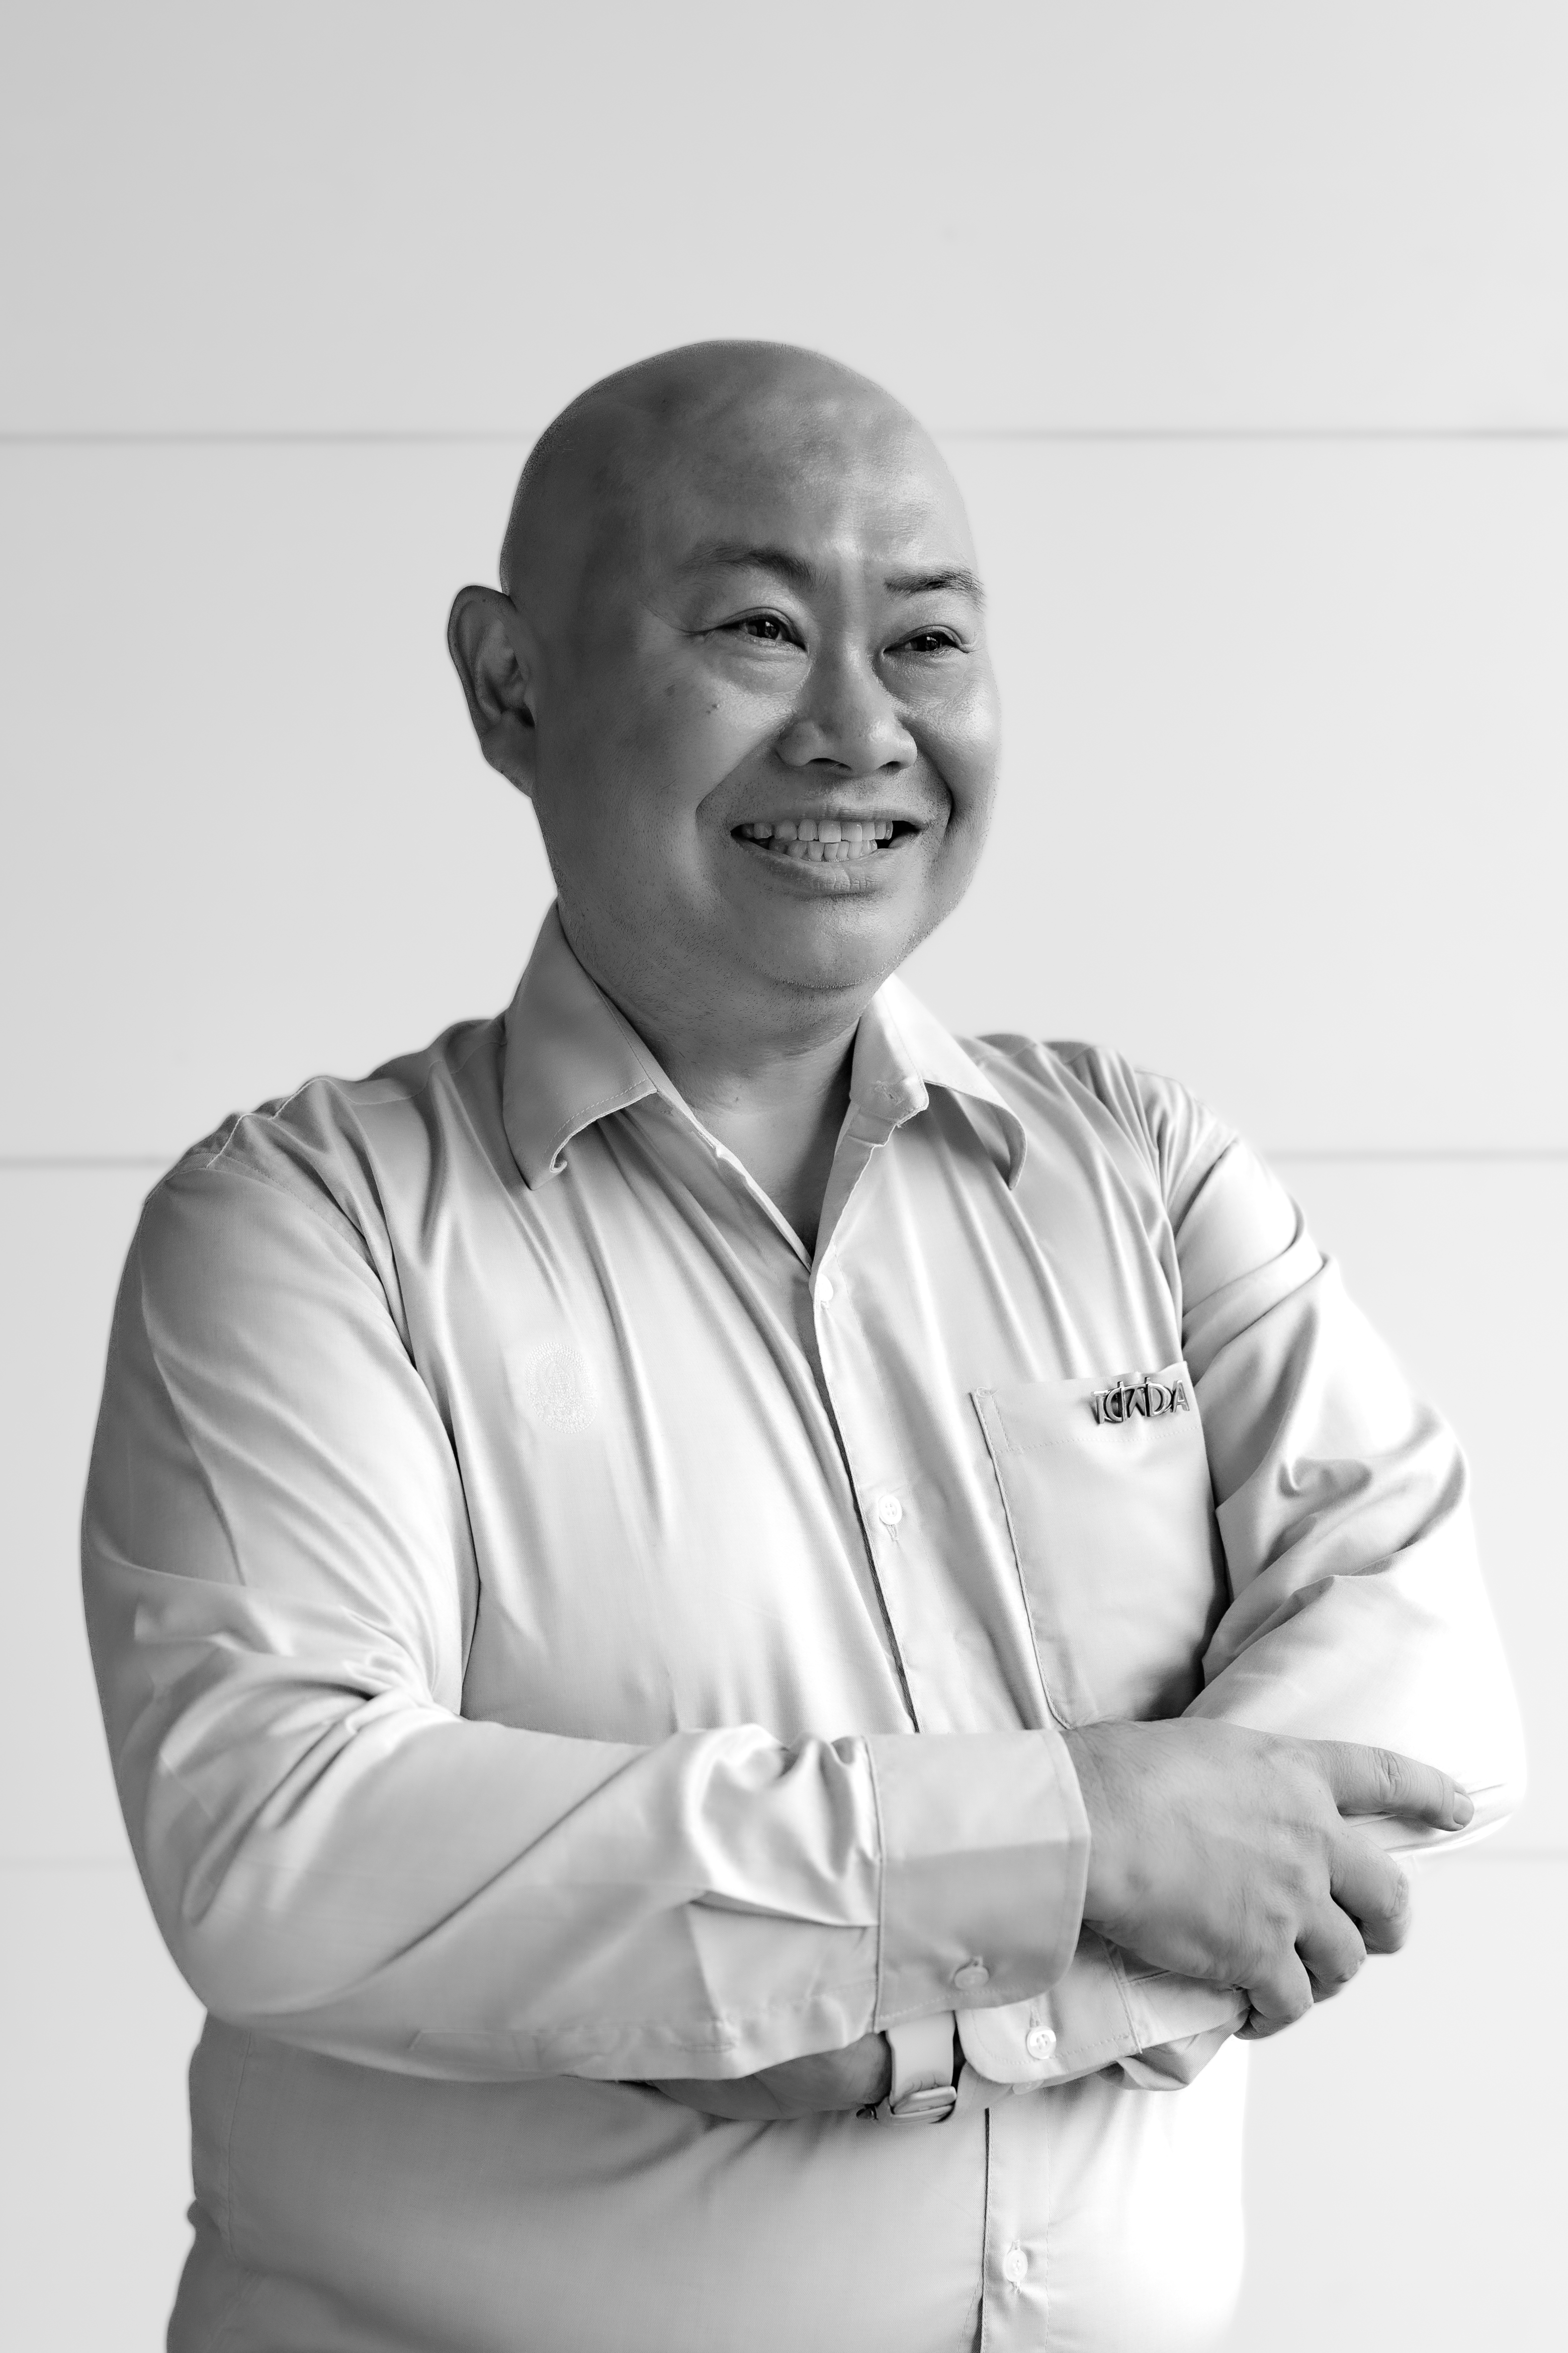 Assistant Professor Dr. Chainarong Ariyaprasert